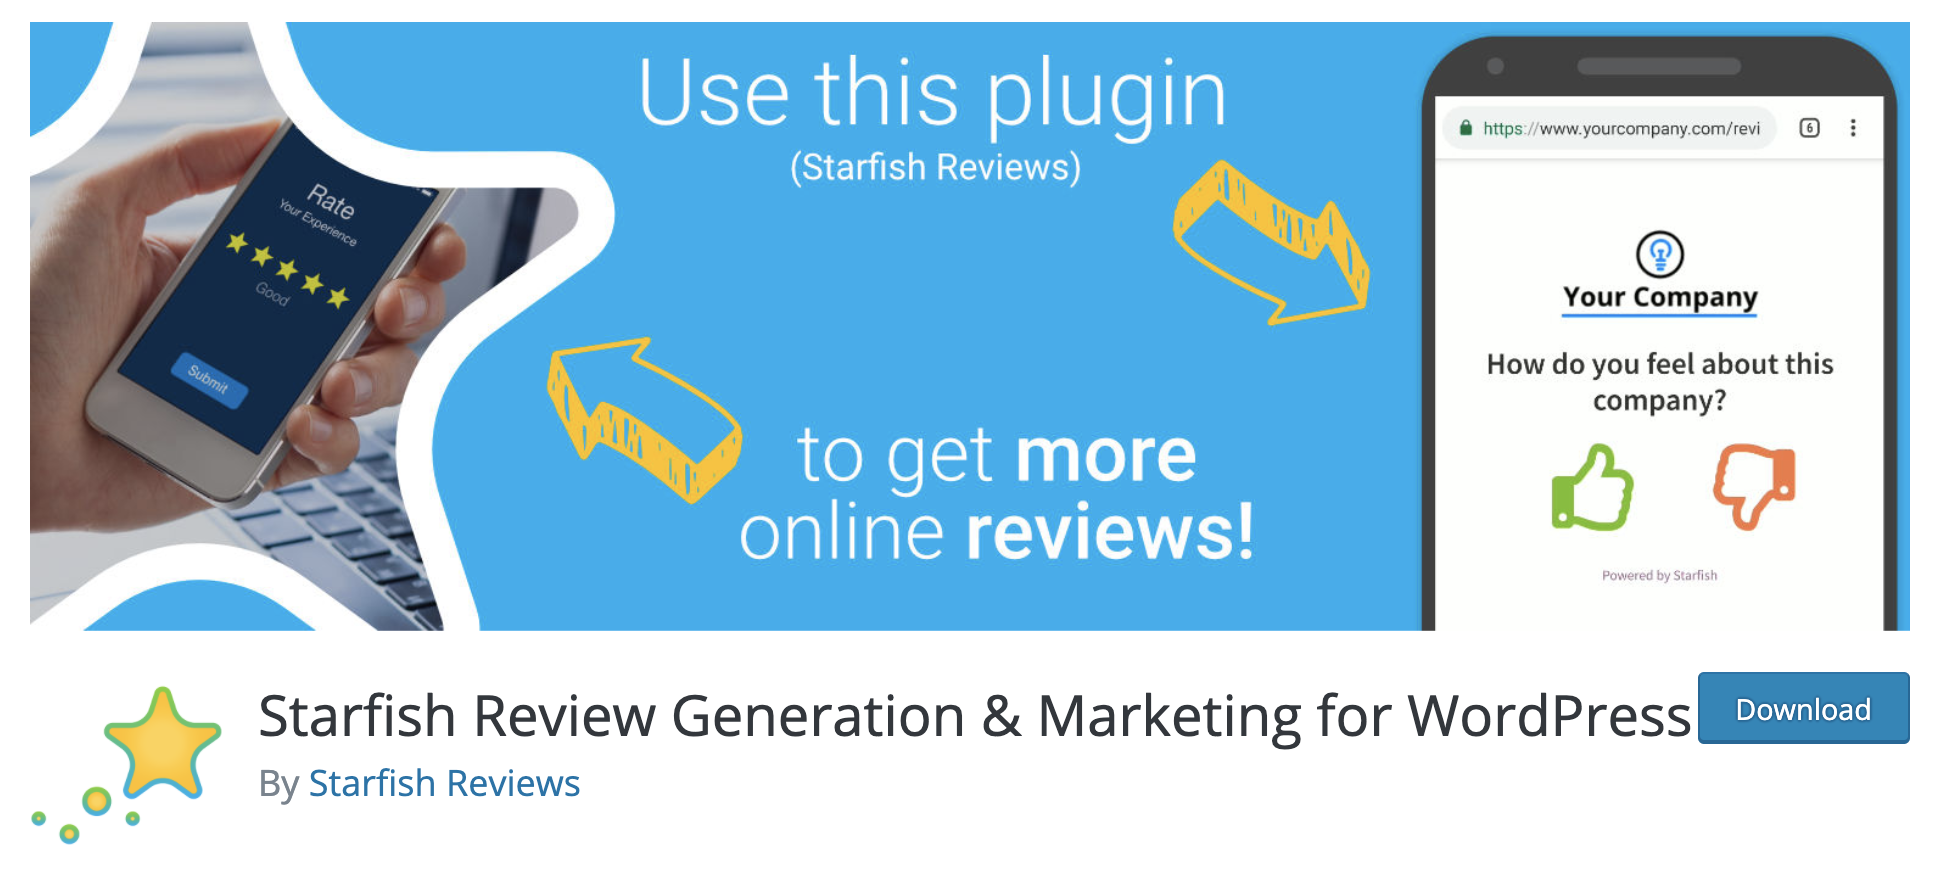 Starfish Reviews WordPress Repository Free Plugin Cover Image